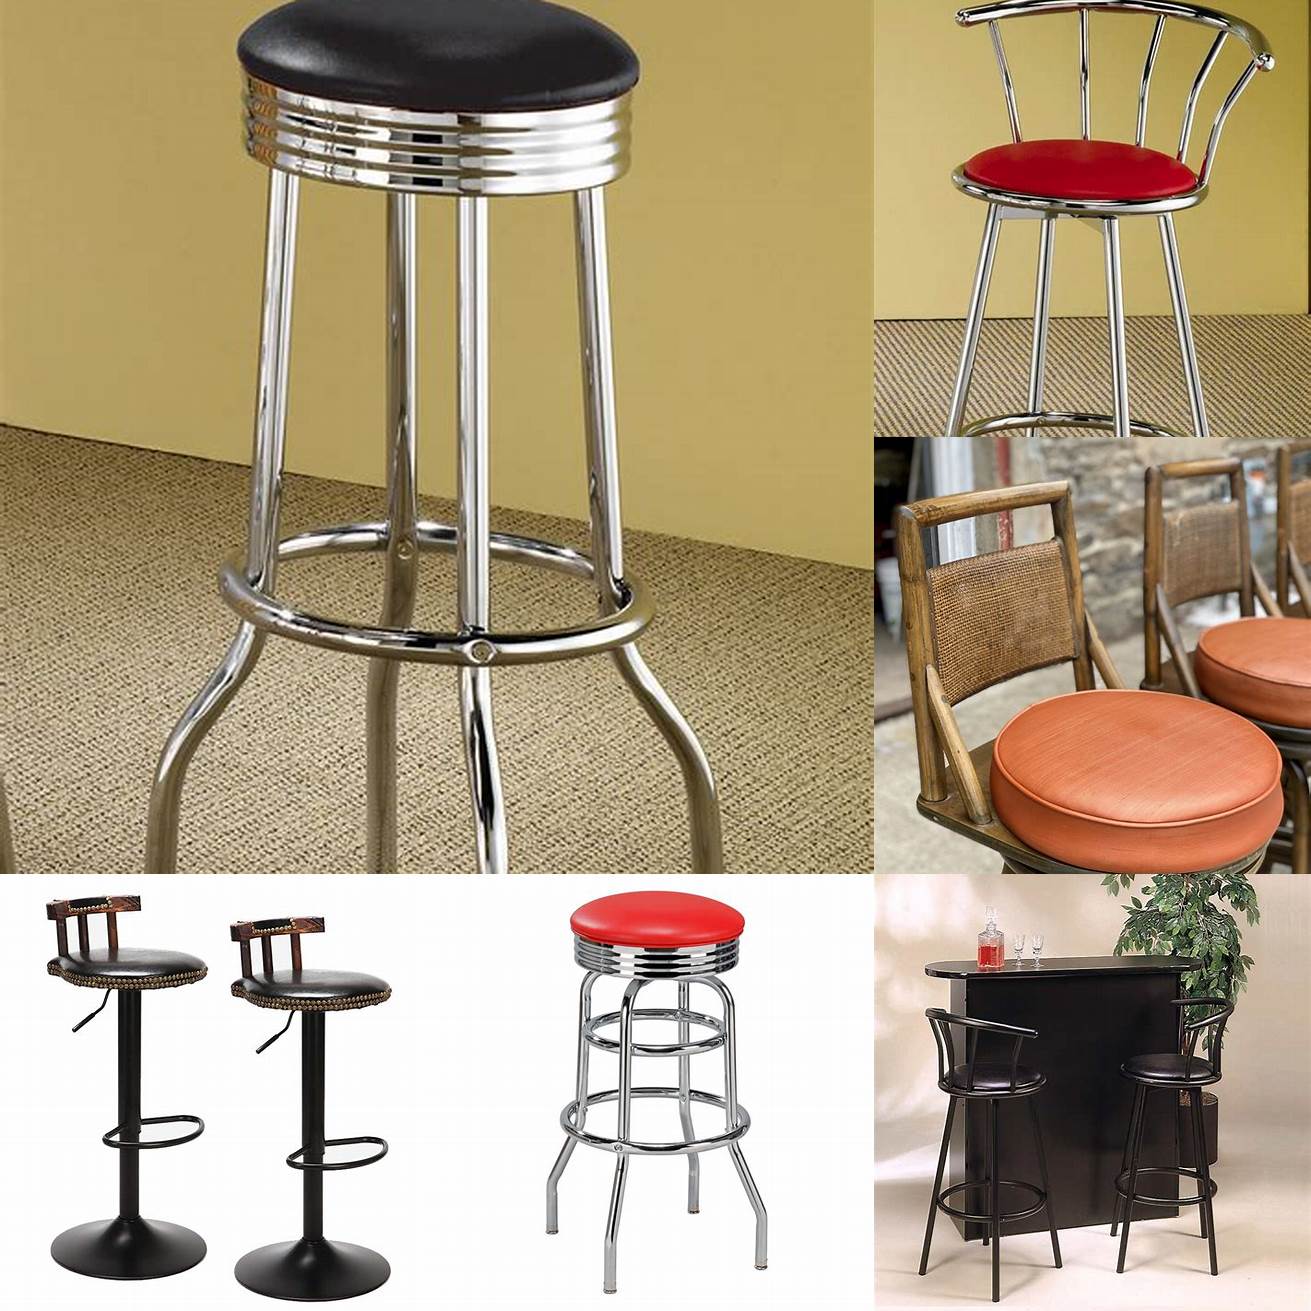 6 Retro bar stools